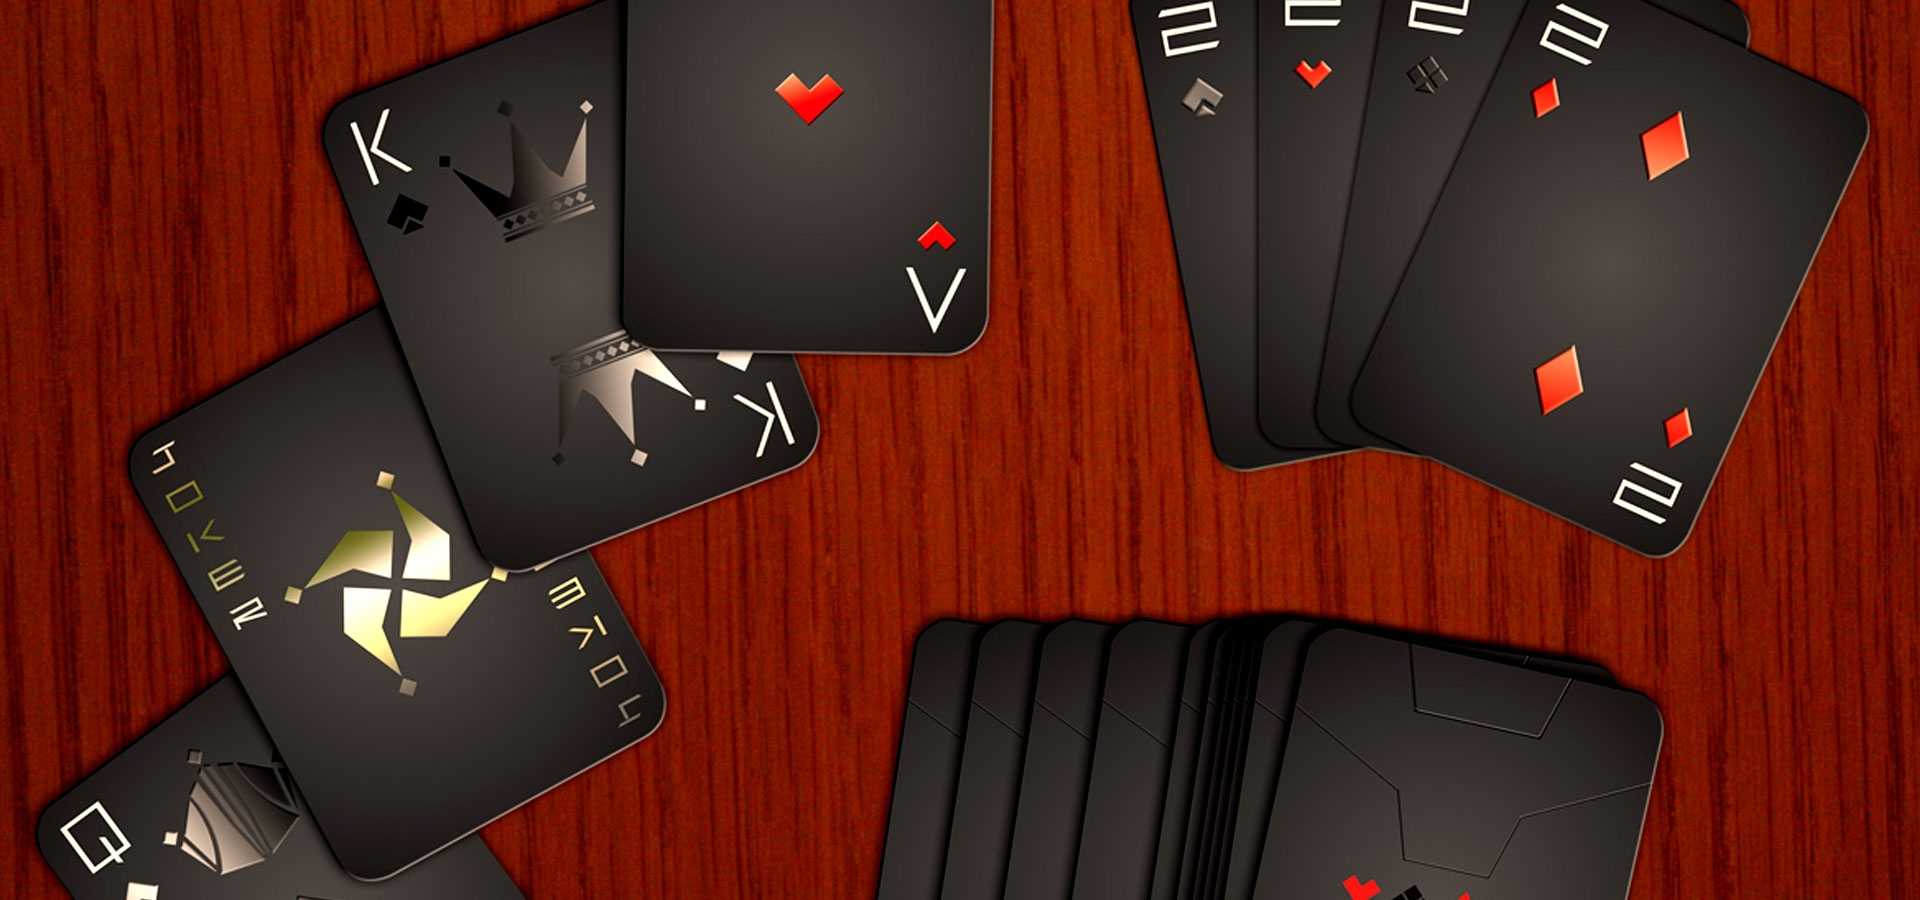 22+ Playing Card Designs | Free & Premium Templates Throughout Playing Card Design Template